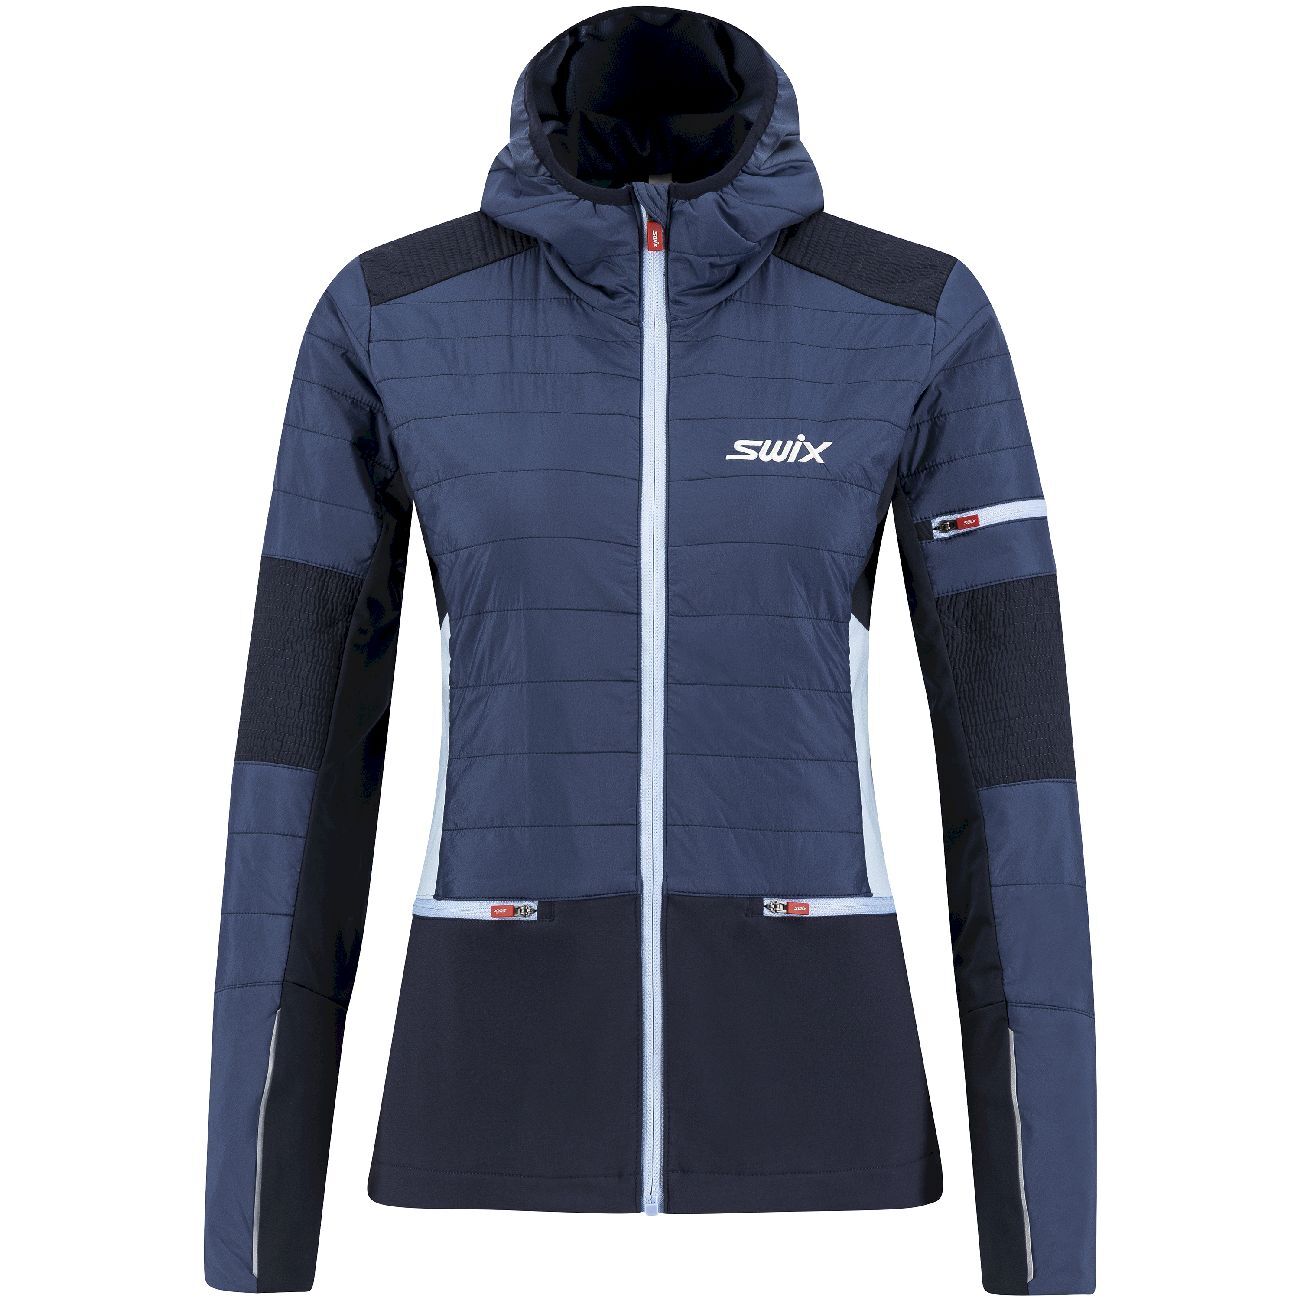 Swix Horizon Jacket - Cross-country ski jacket - Women's